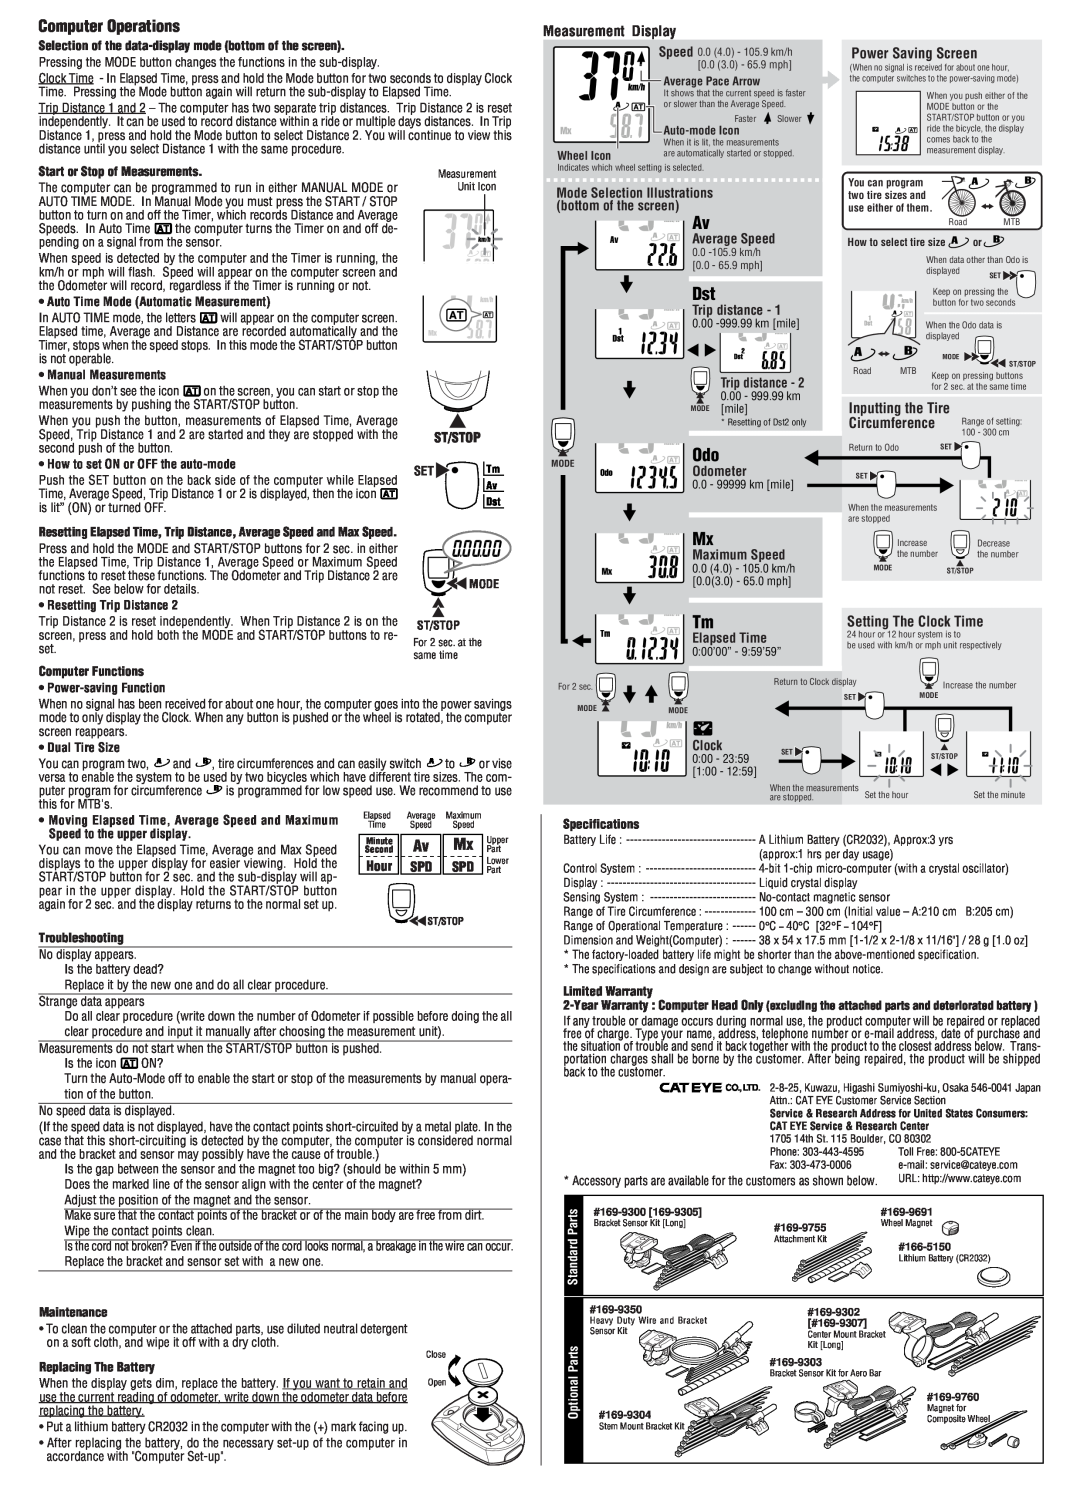 Cateye CC-MT400 owner manual Computer Operations, Measurement Display, Power Saving Screen 